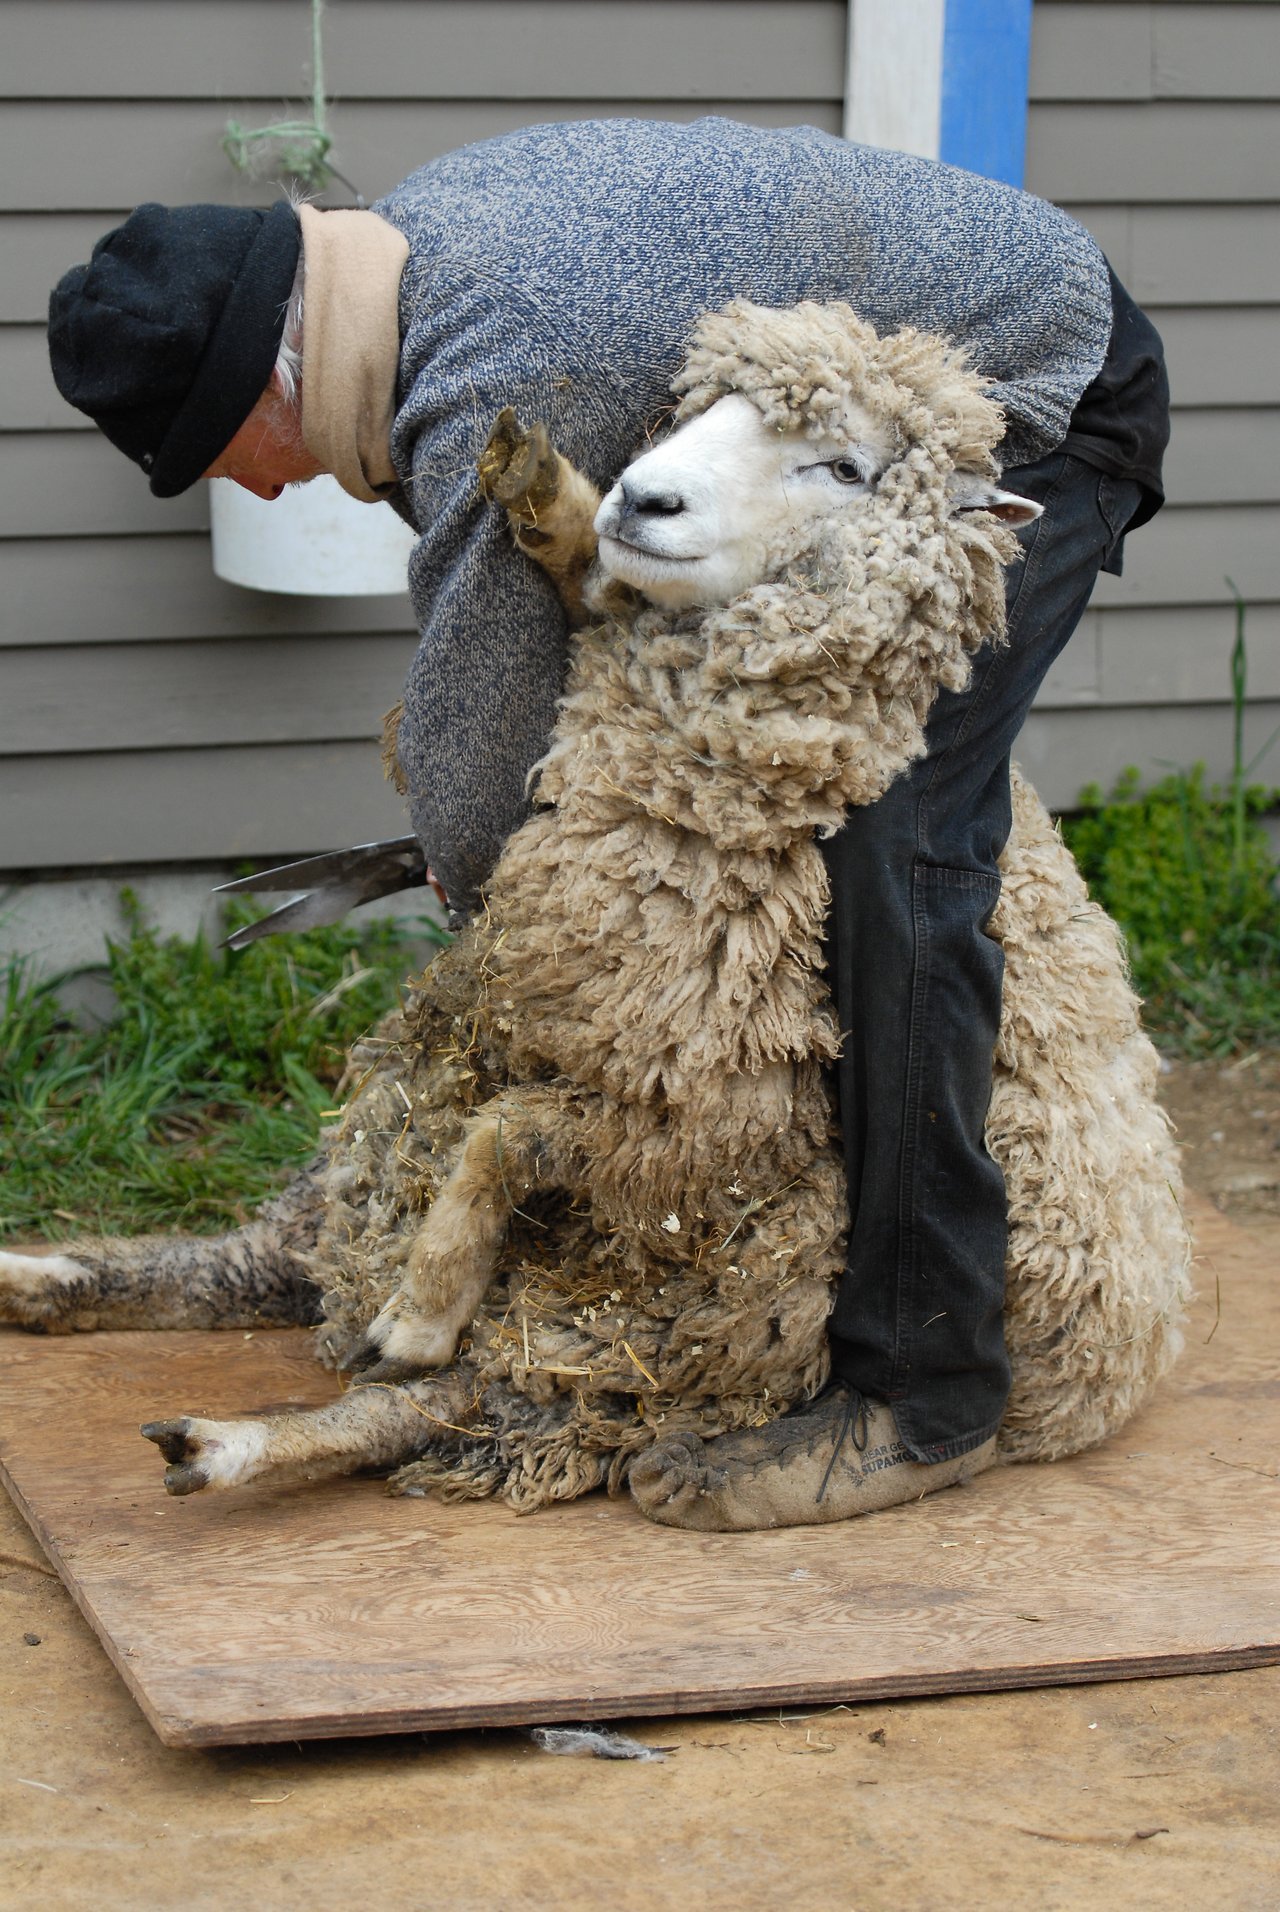 Shaving a sheep